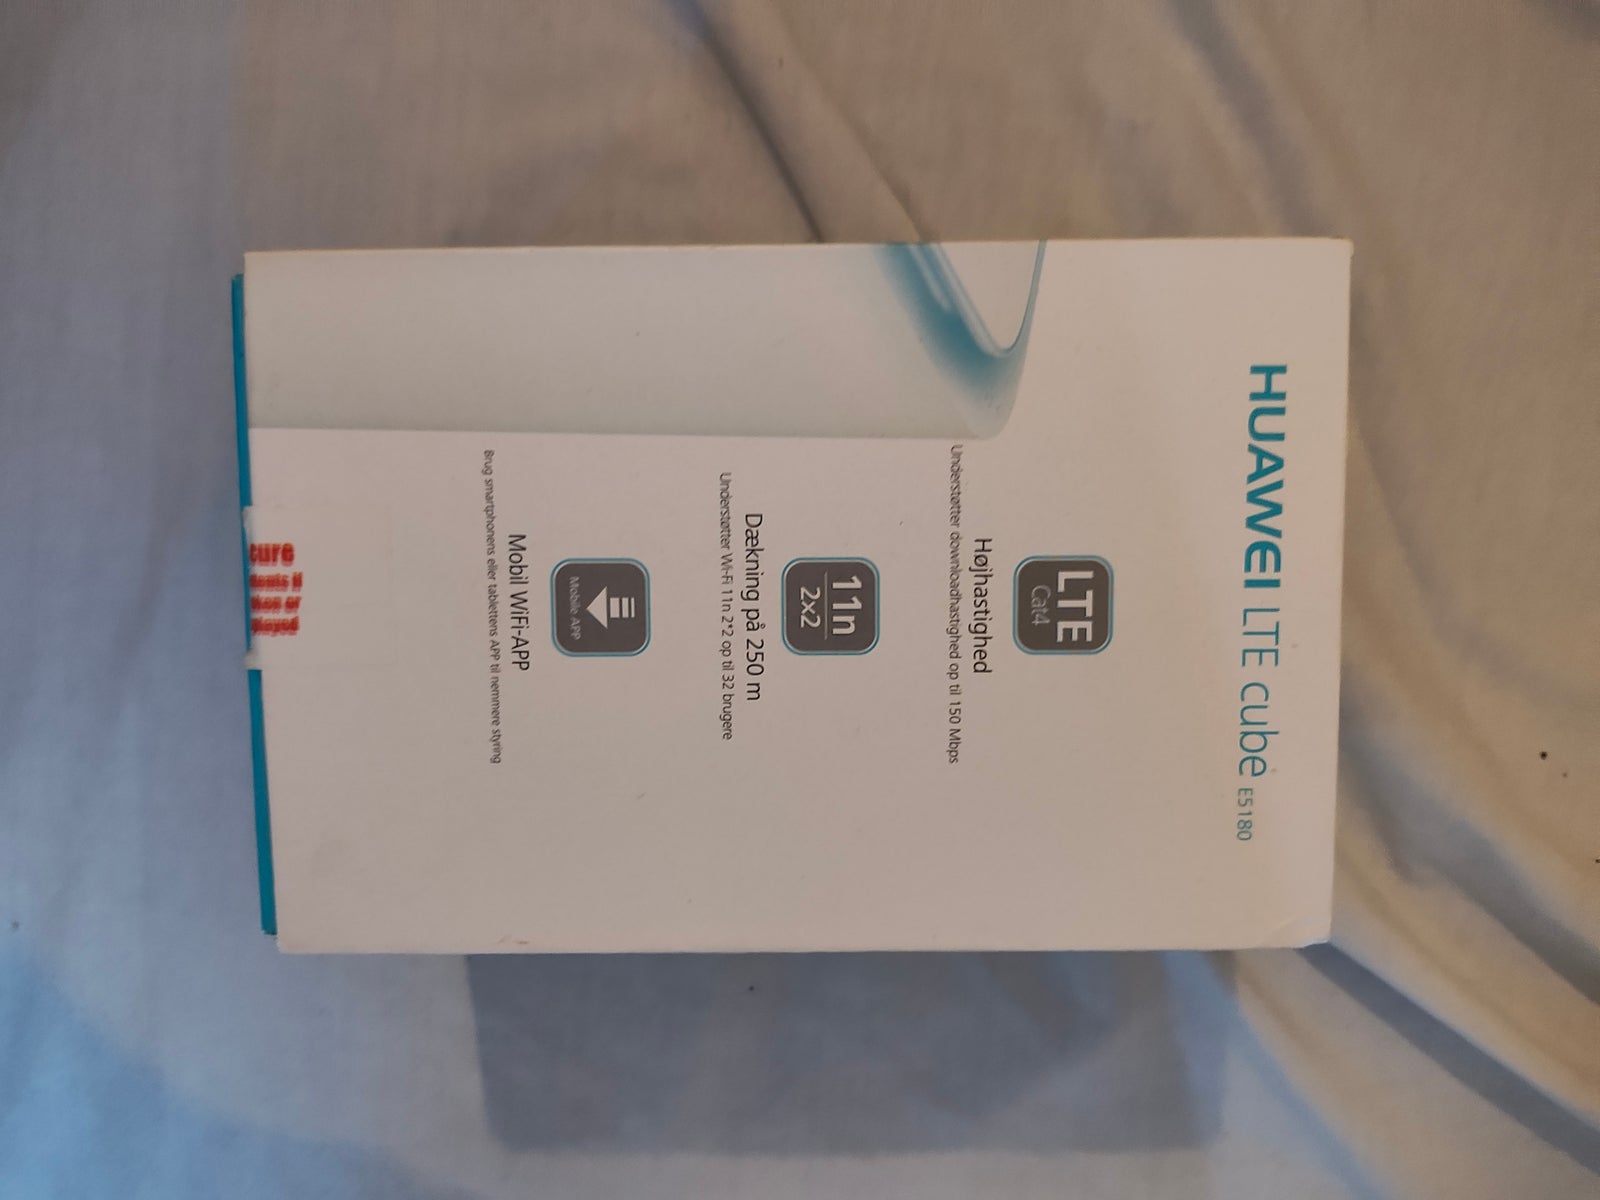 Huawei cube, Rooter sim card